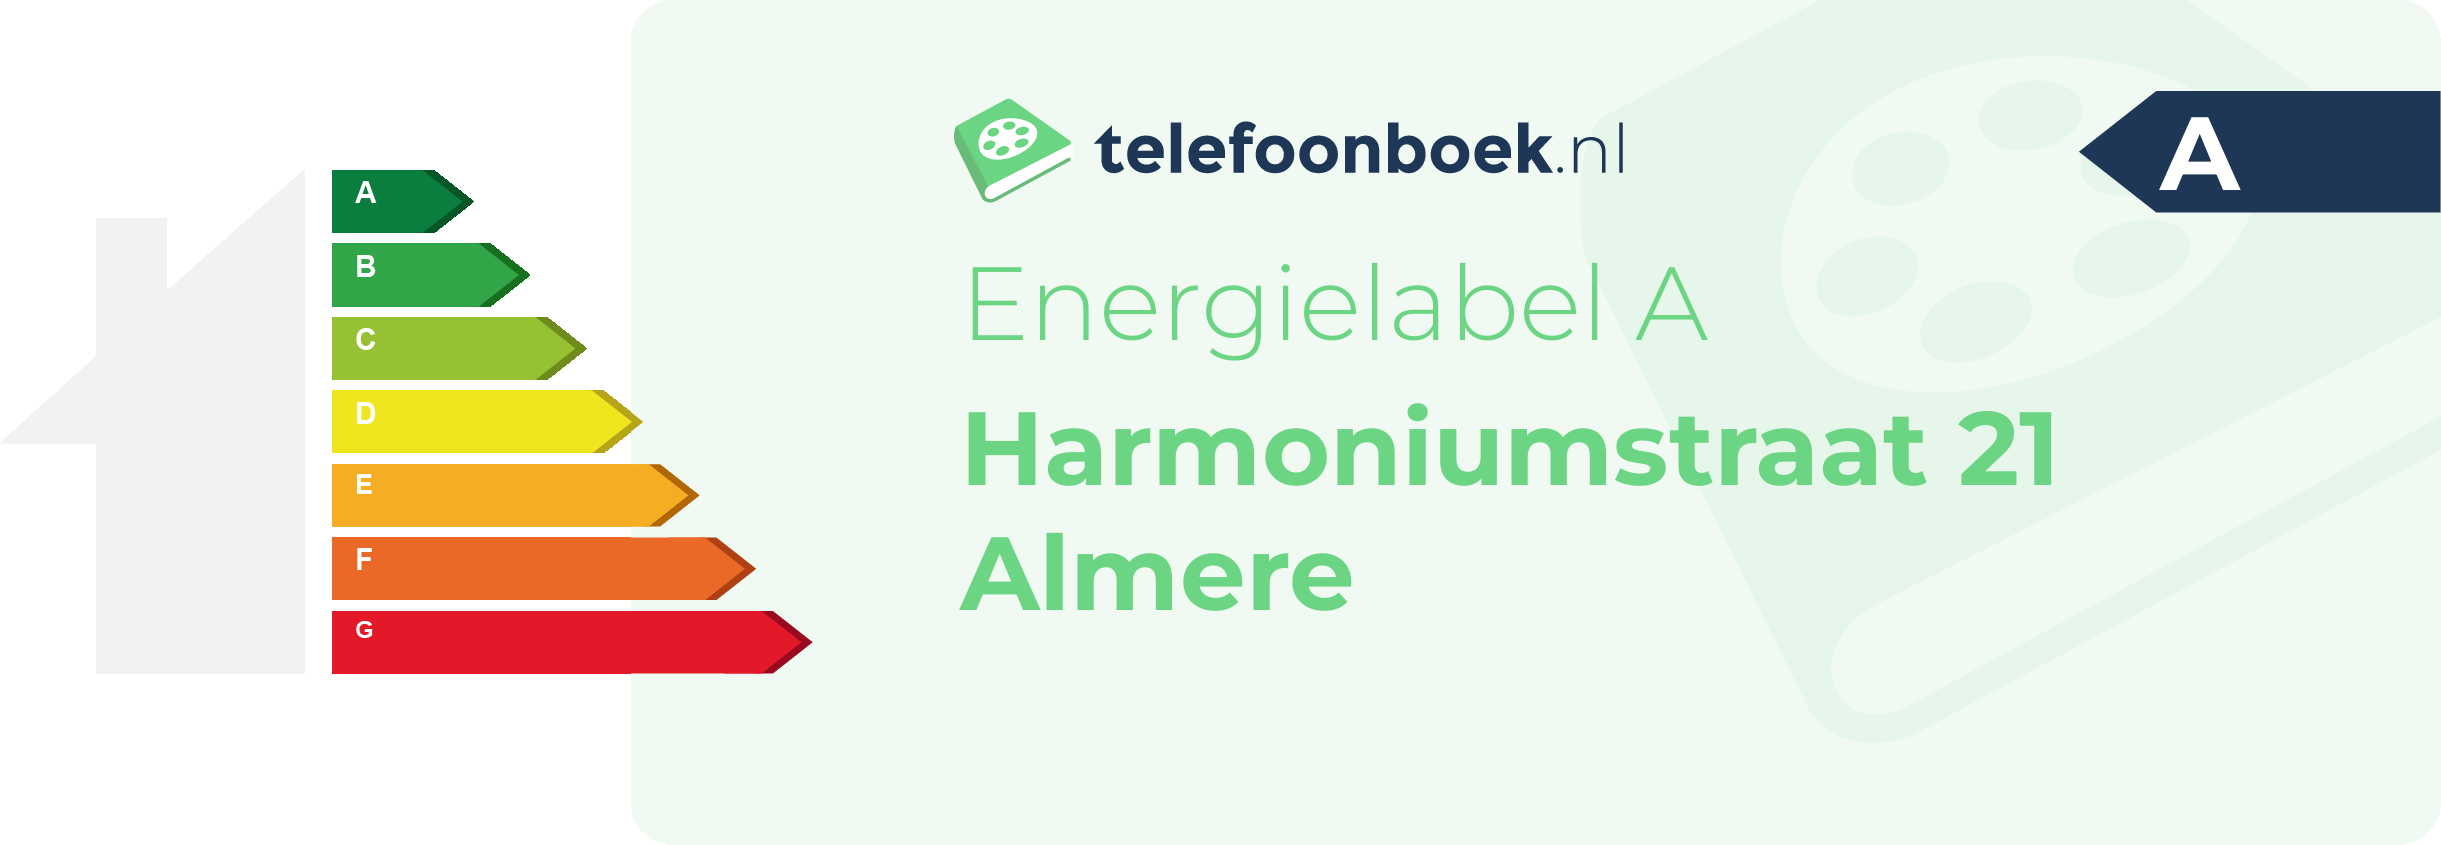 Energielabel Harmoniumstraat 21 Almere